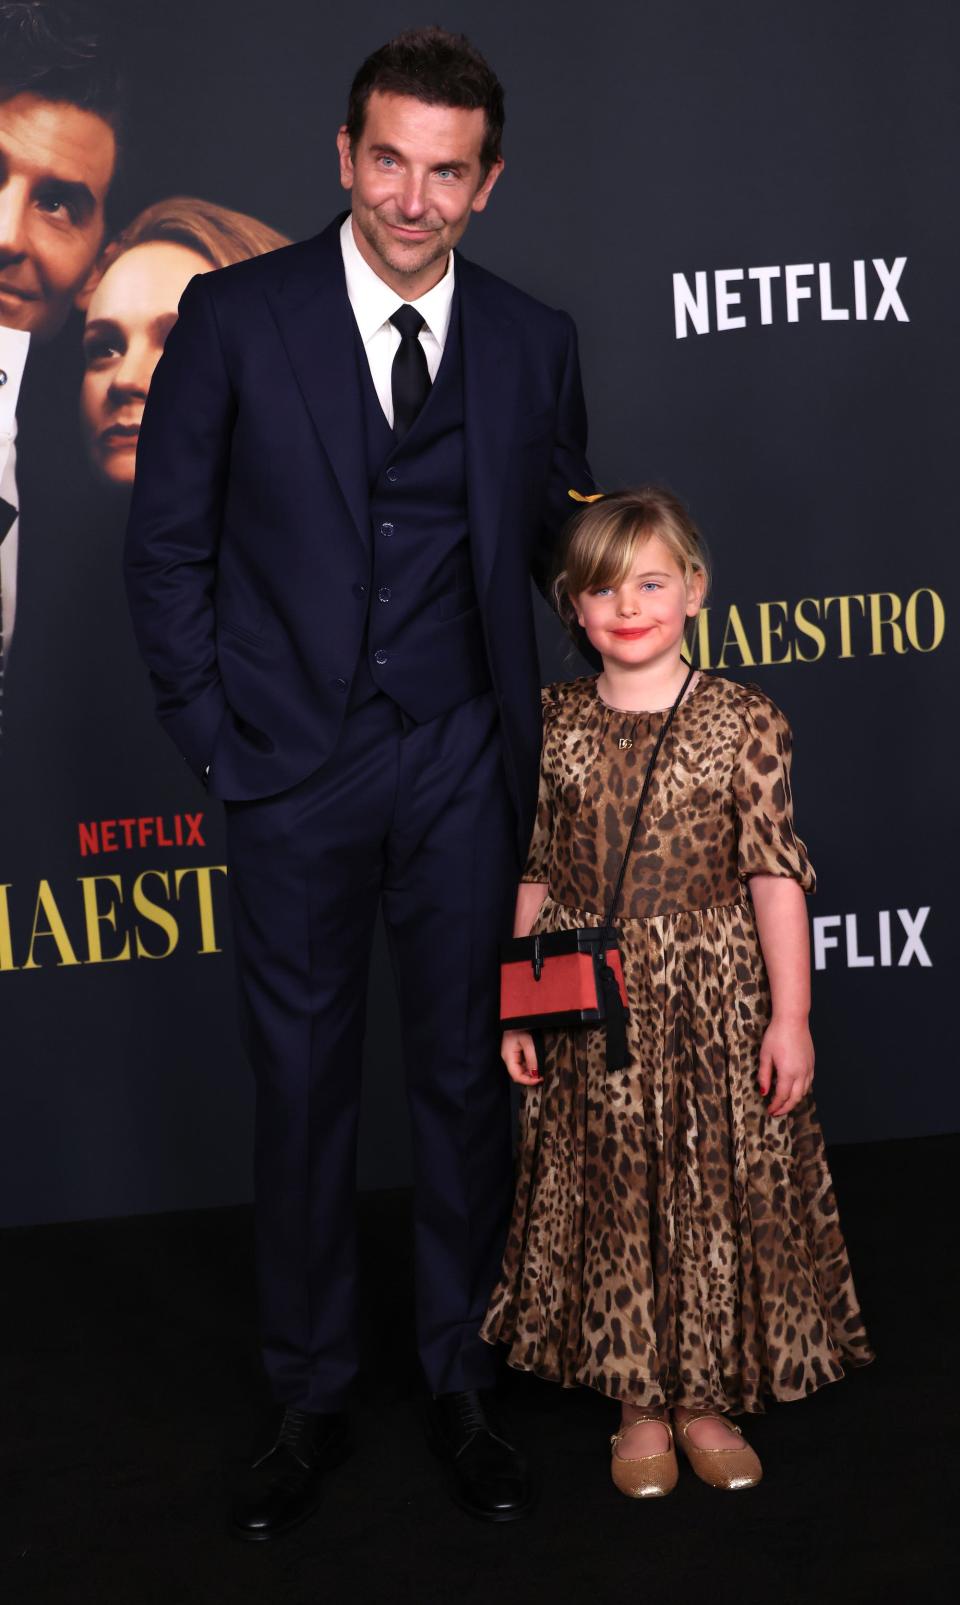 Bradley Cooper and his daughter Lea De Seine Shayk Cooper at Netflix's "Maestro" LA special screening